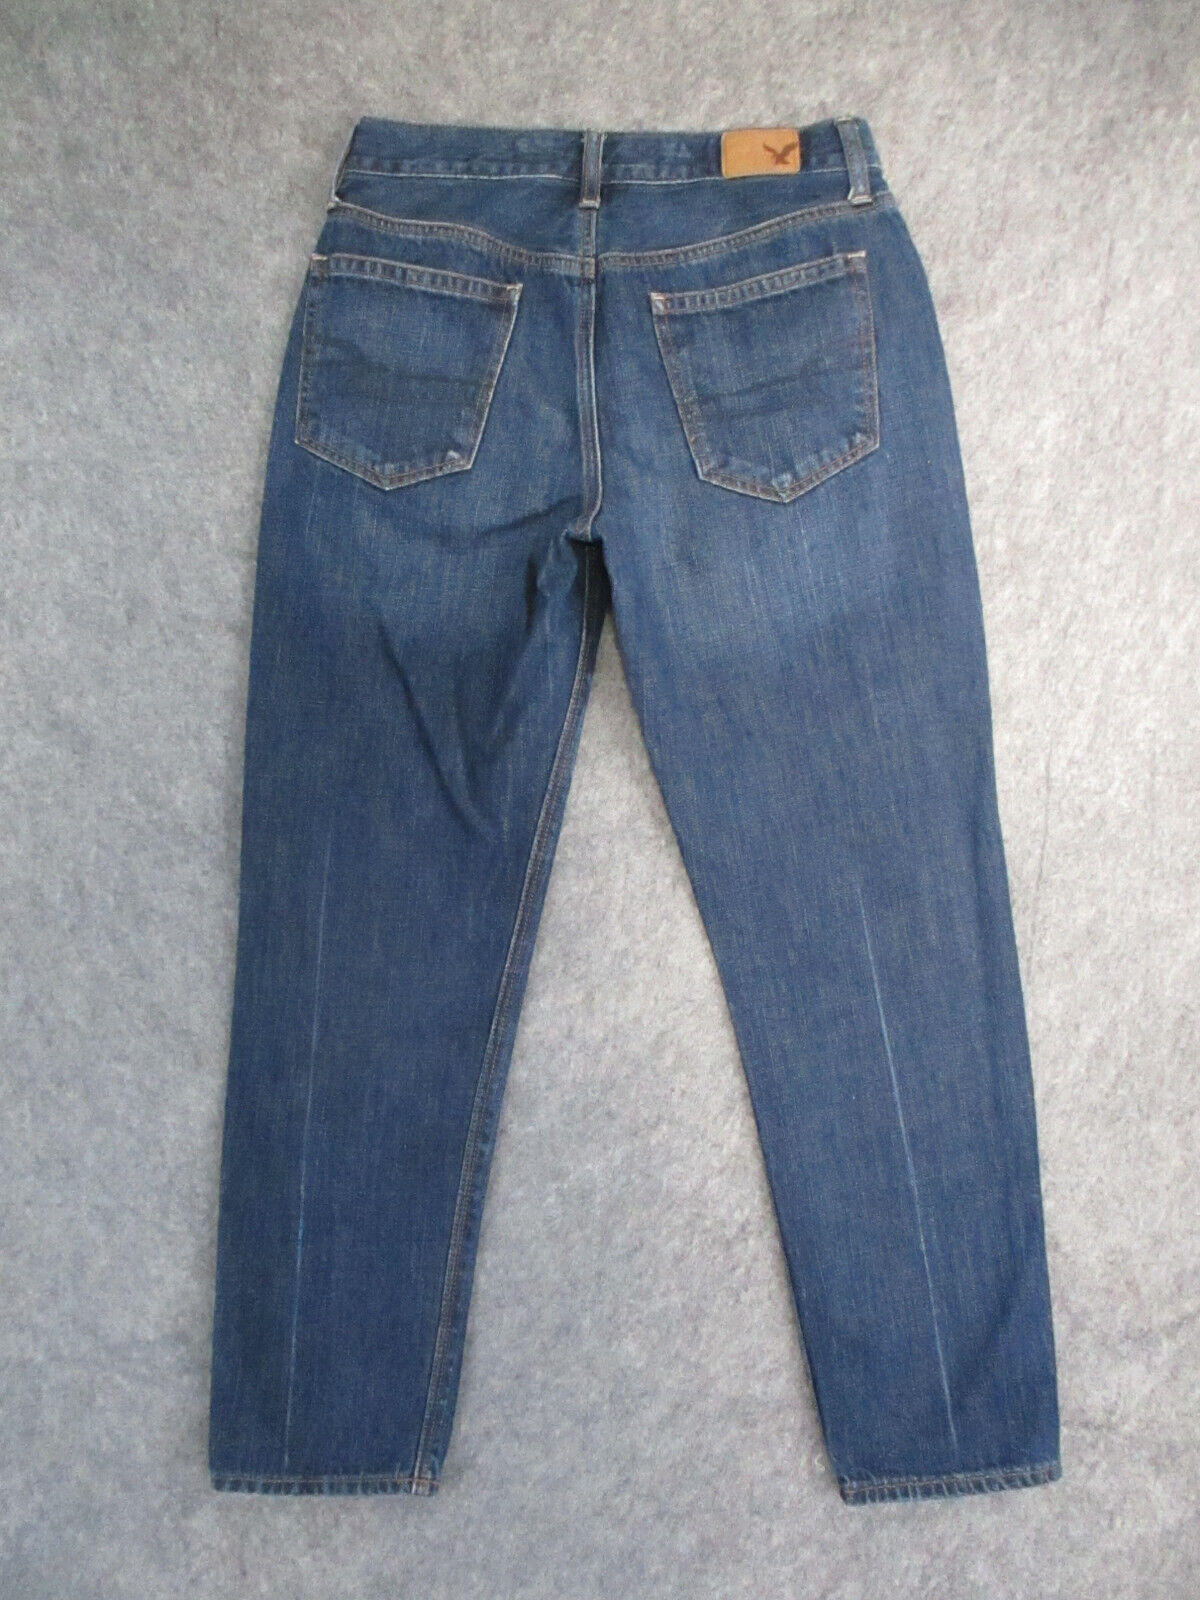 American Eagle Jeans Womens 6 Blue Denim Vintage Hi Rise Straight Retro 28x27